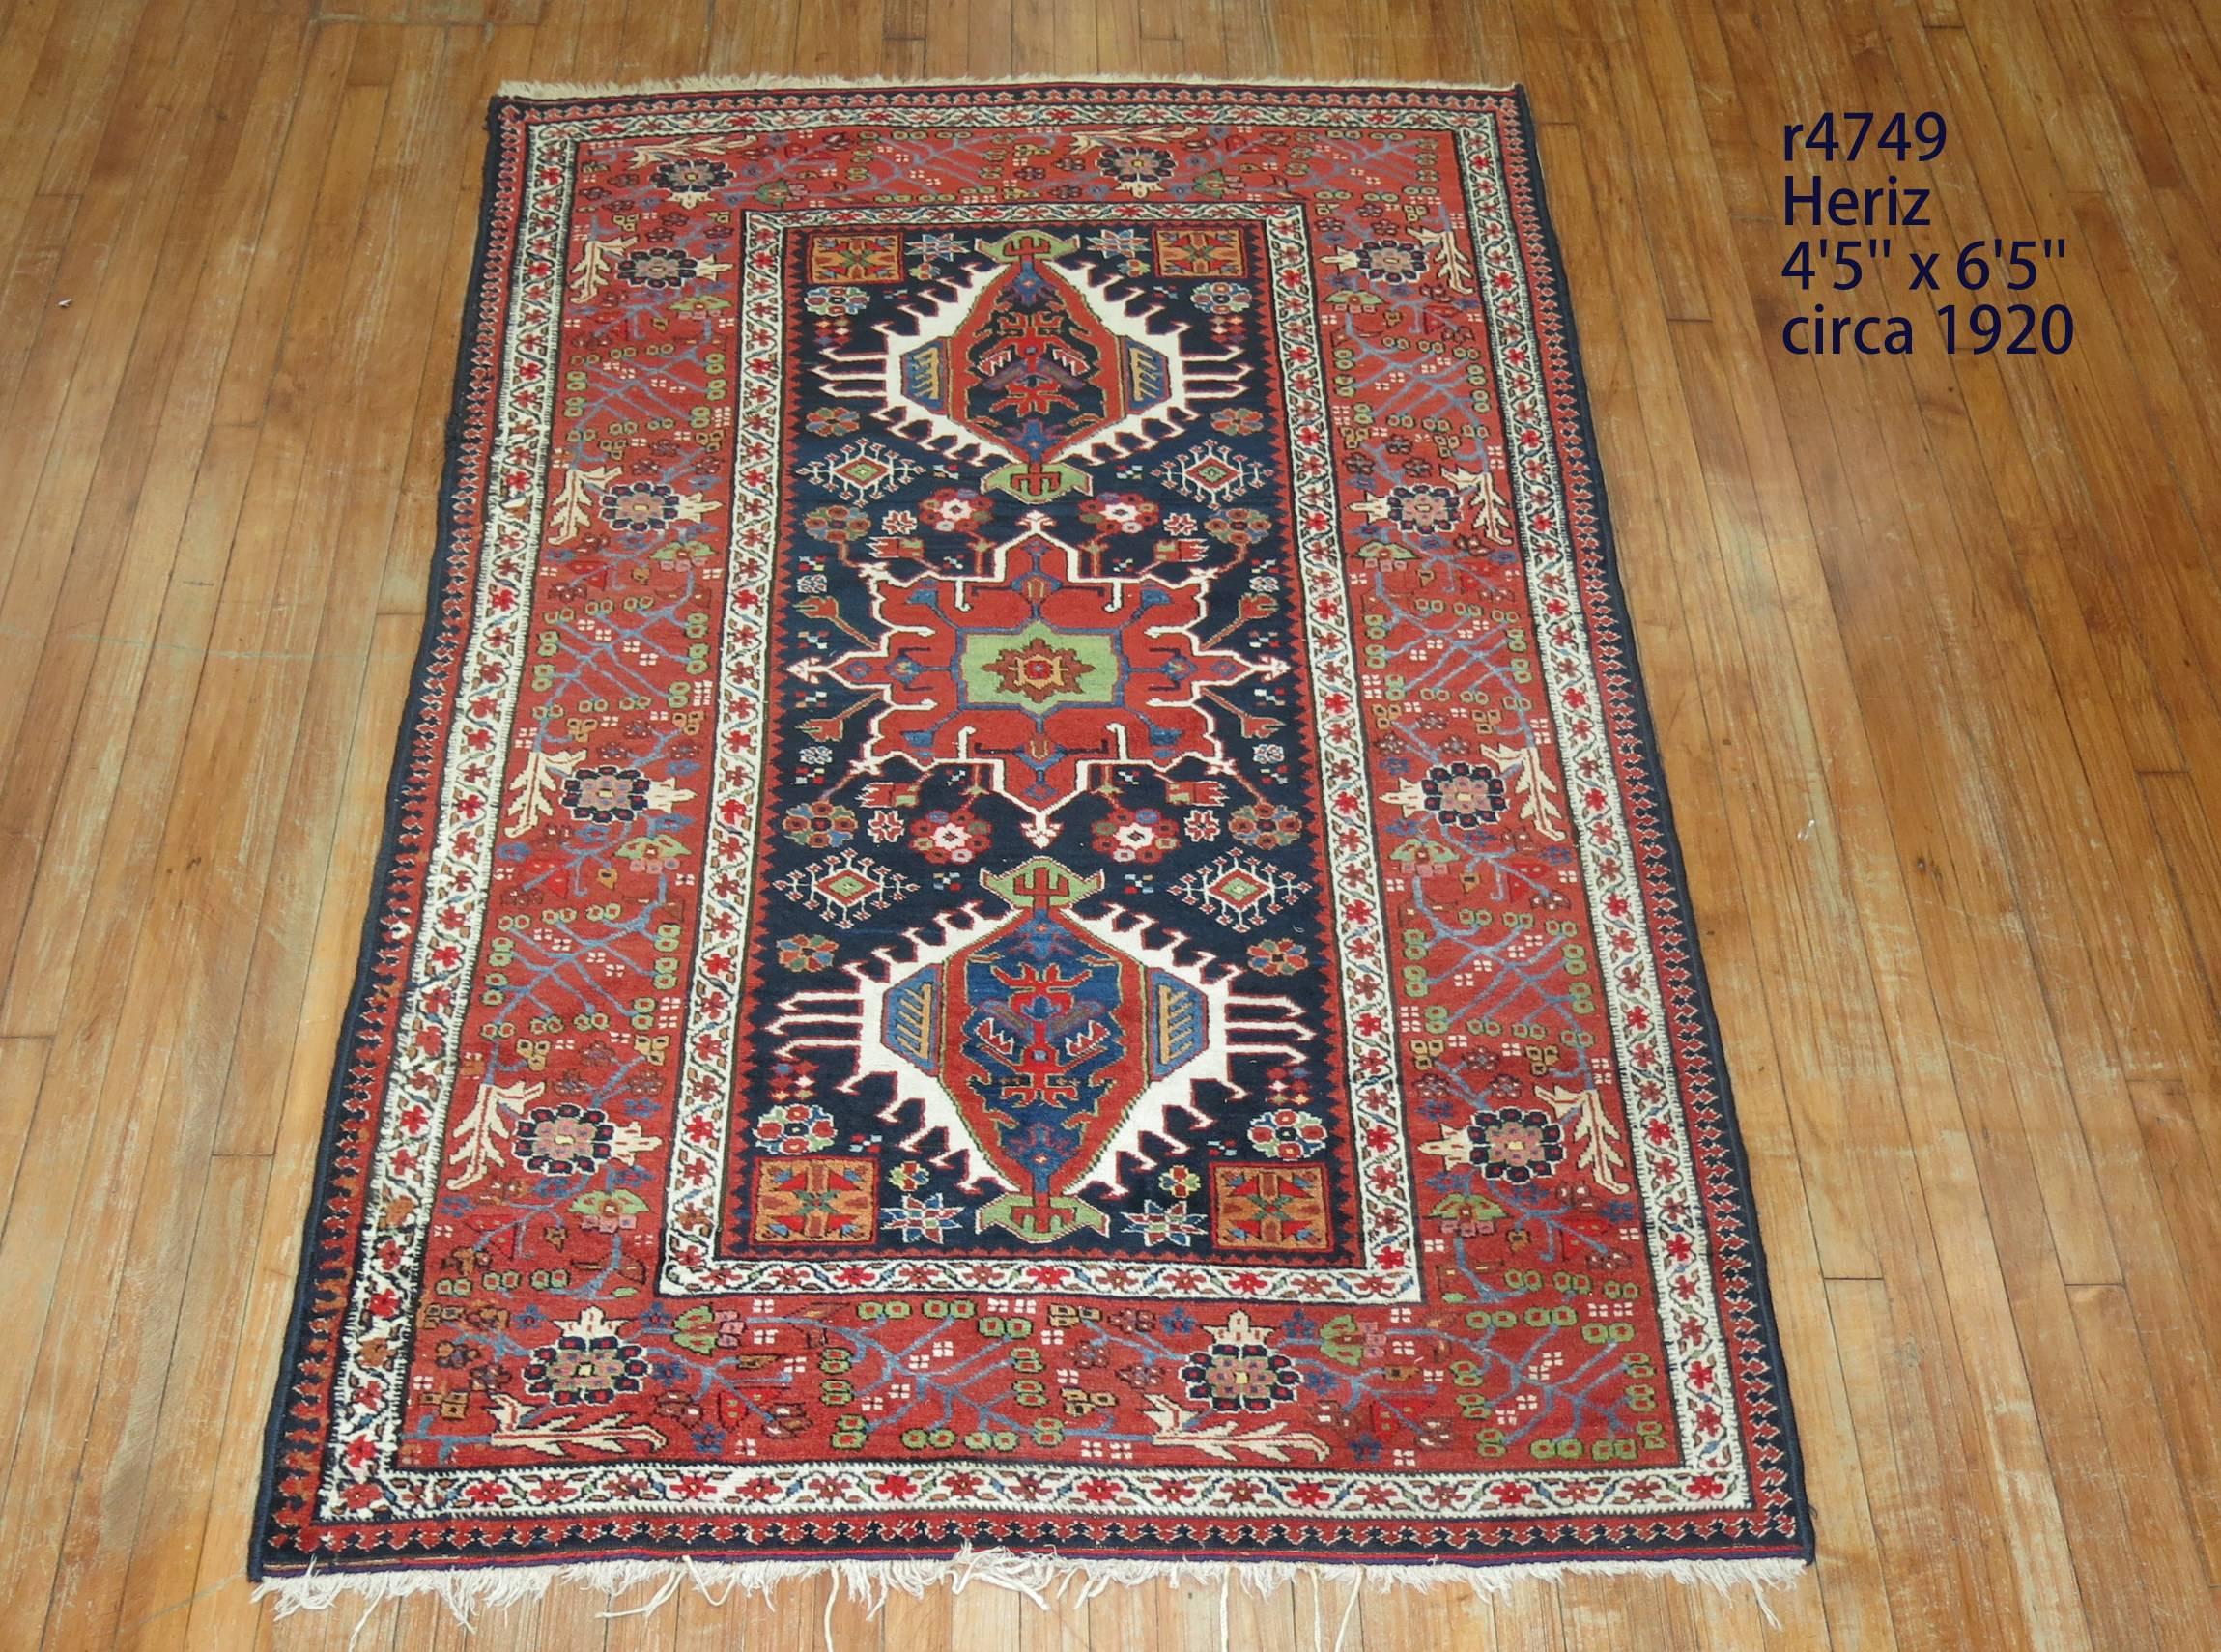 Bold high contrast Persian Heriz Karadja rug from the early 20th century.